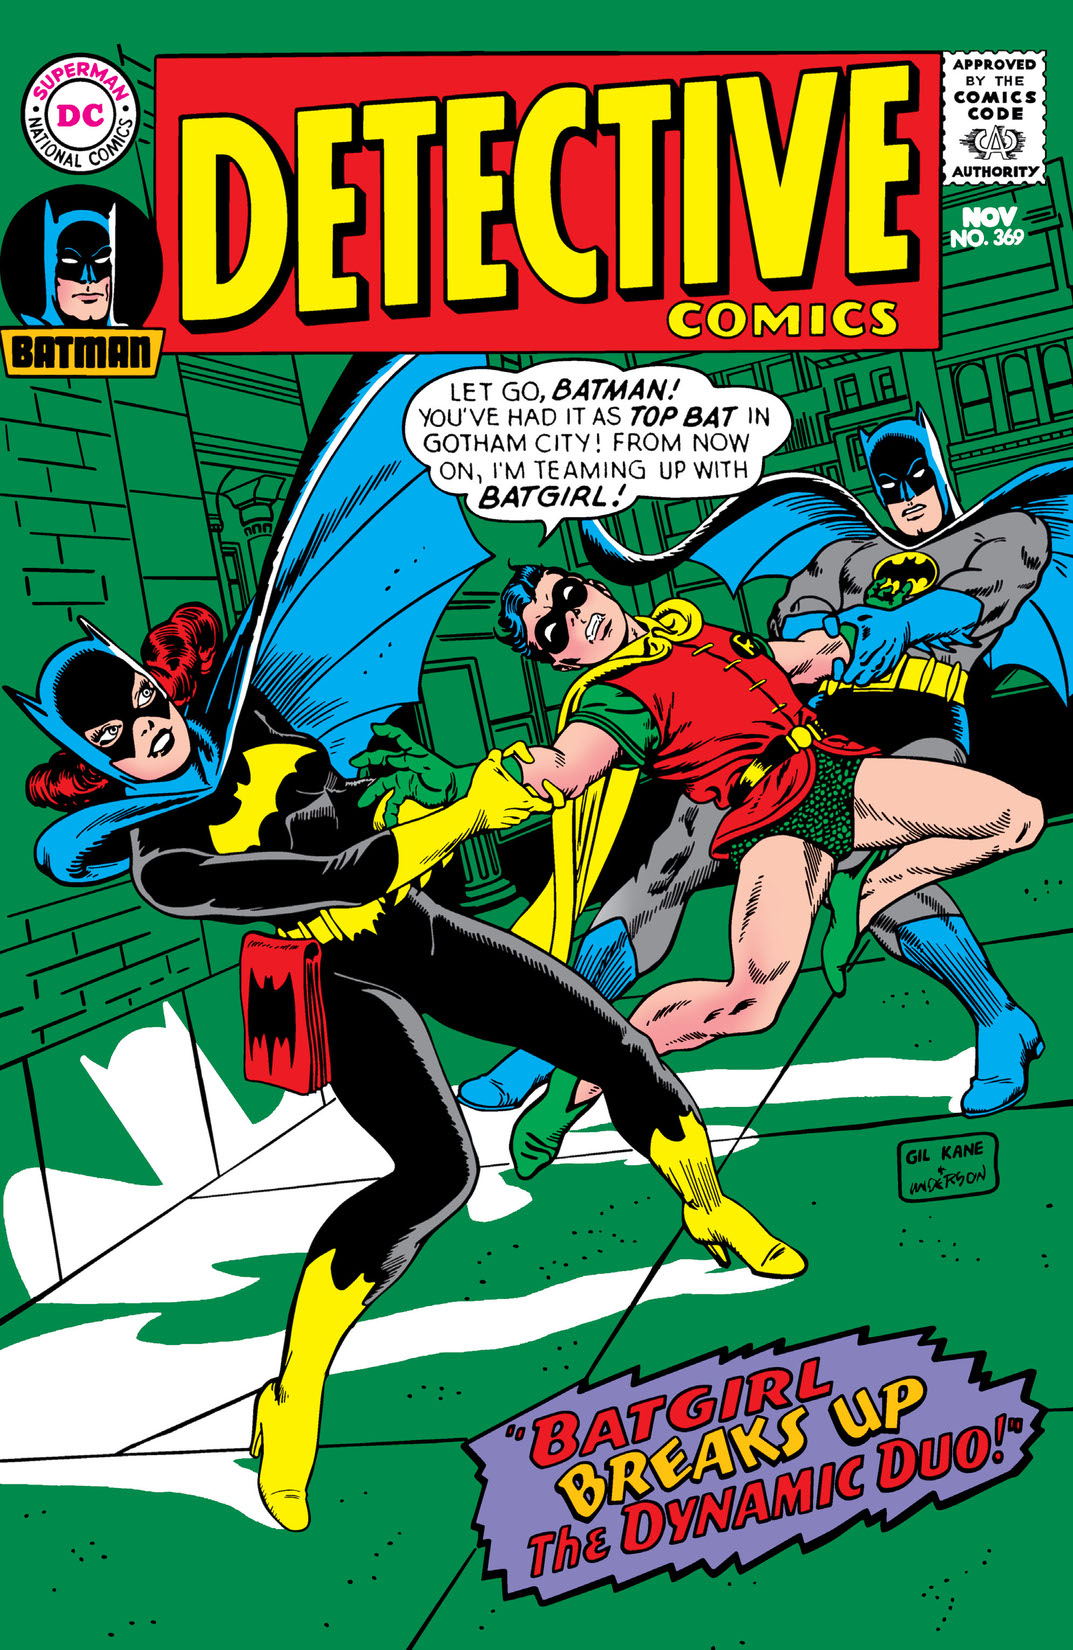 Detective Comics (1937-) #369 preview images